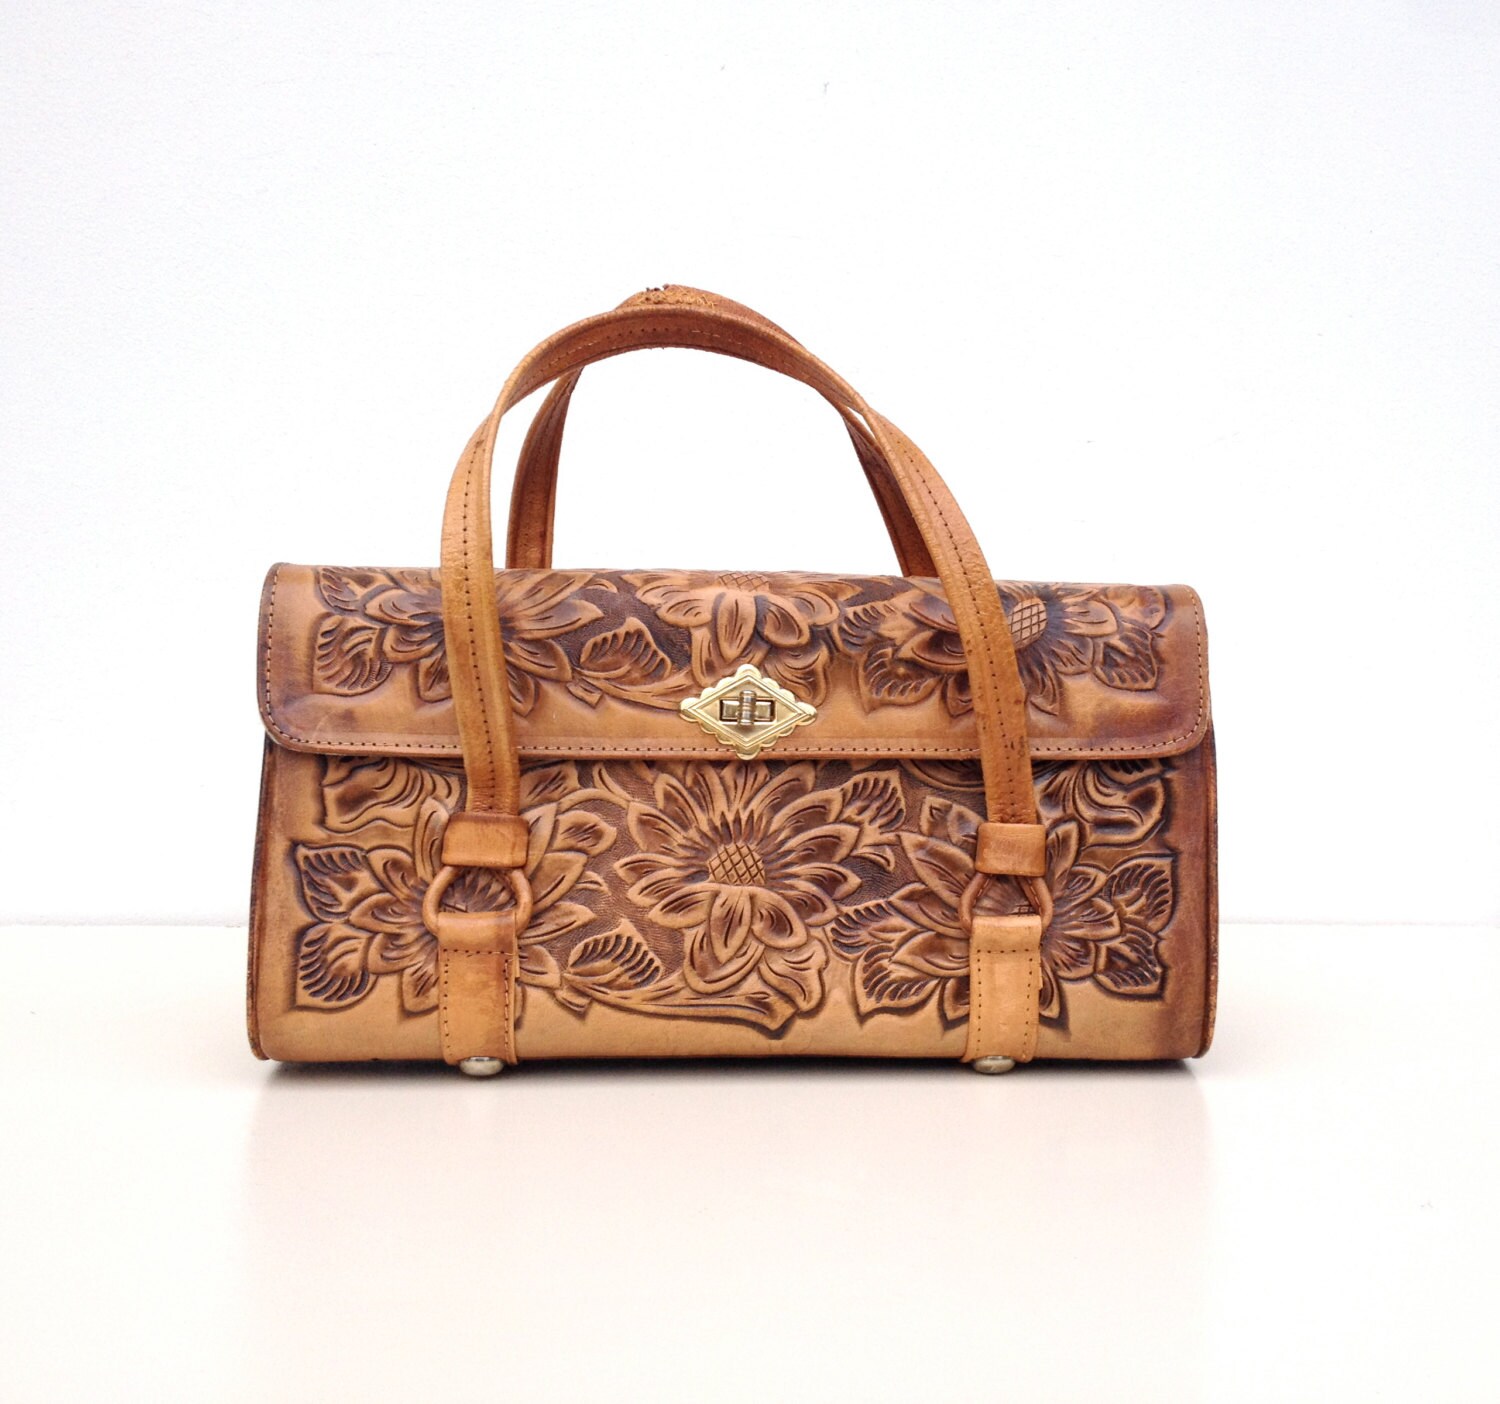 Tooled leather purse vintage caramel tan leather 1970's